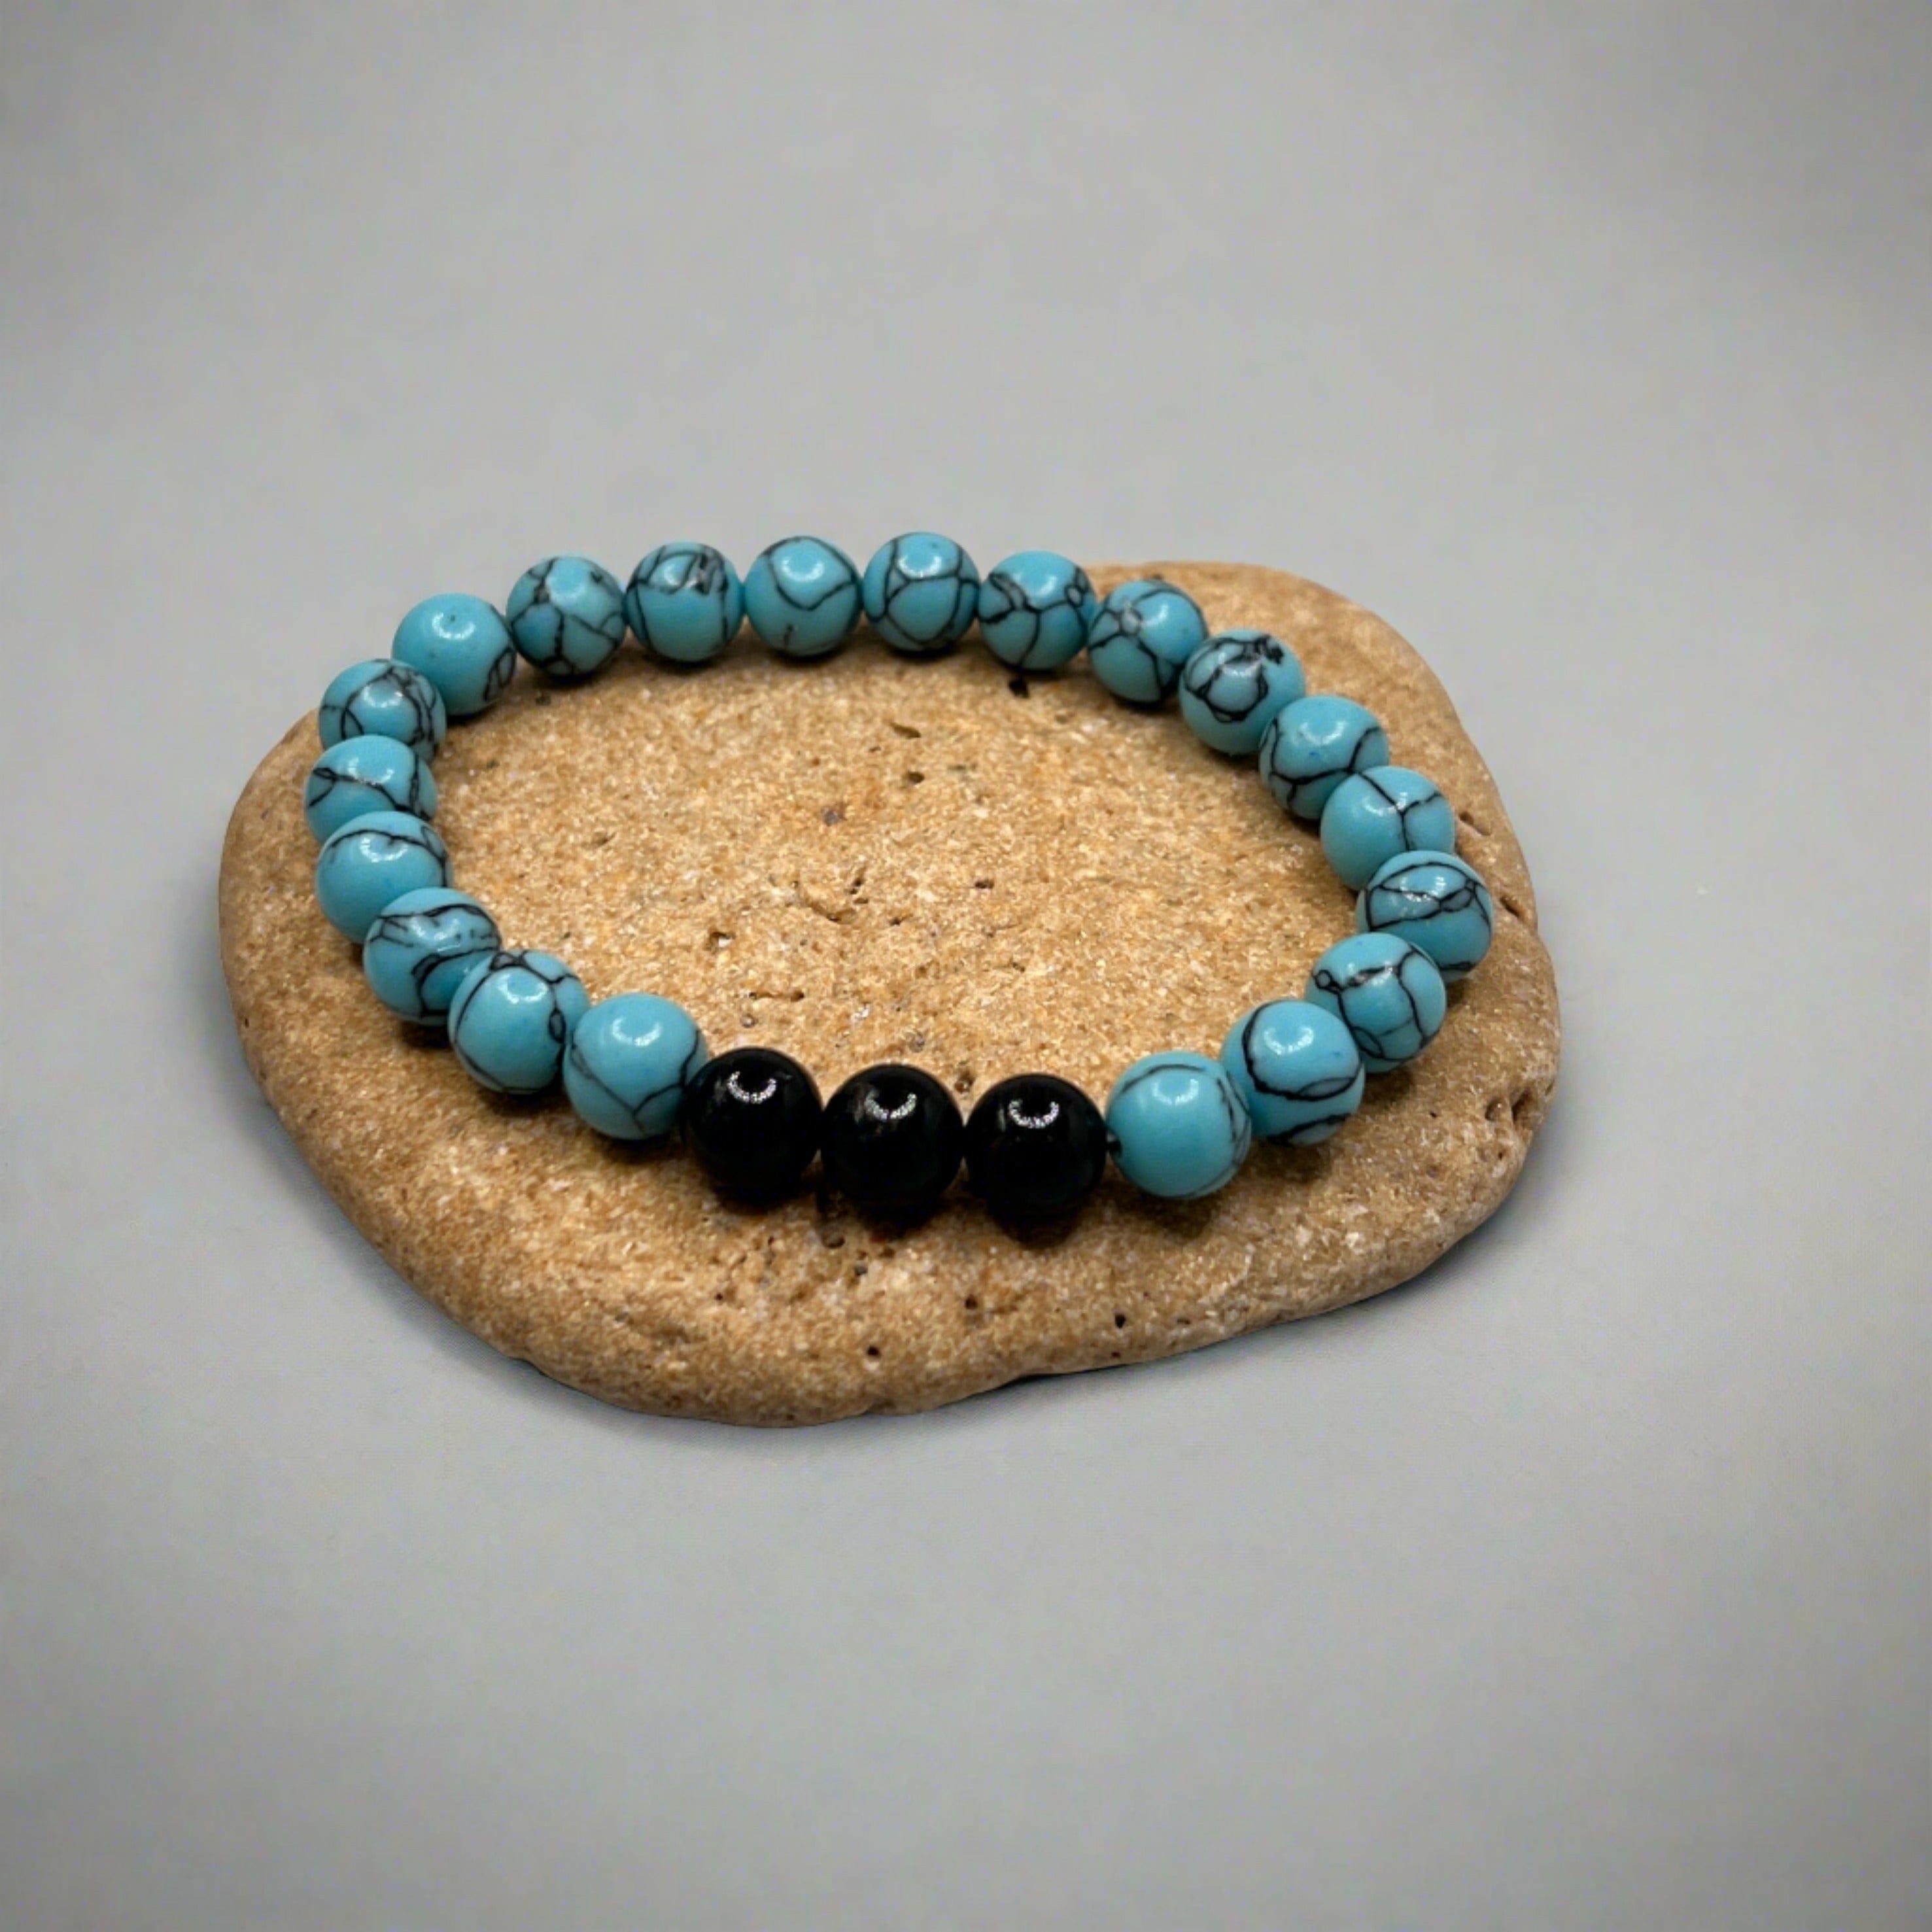 Handmade beaded bracelet with striking turquoise gemstone accents